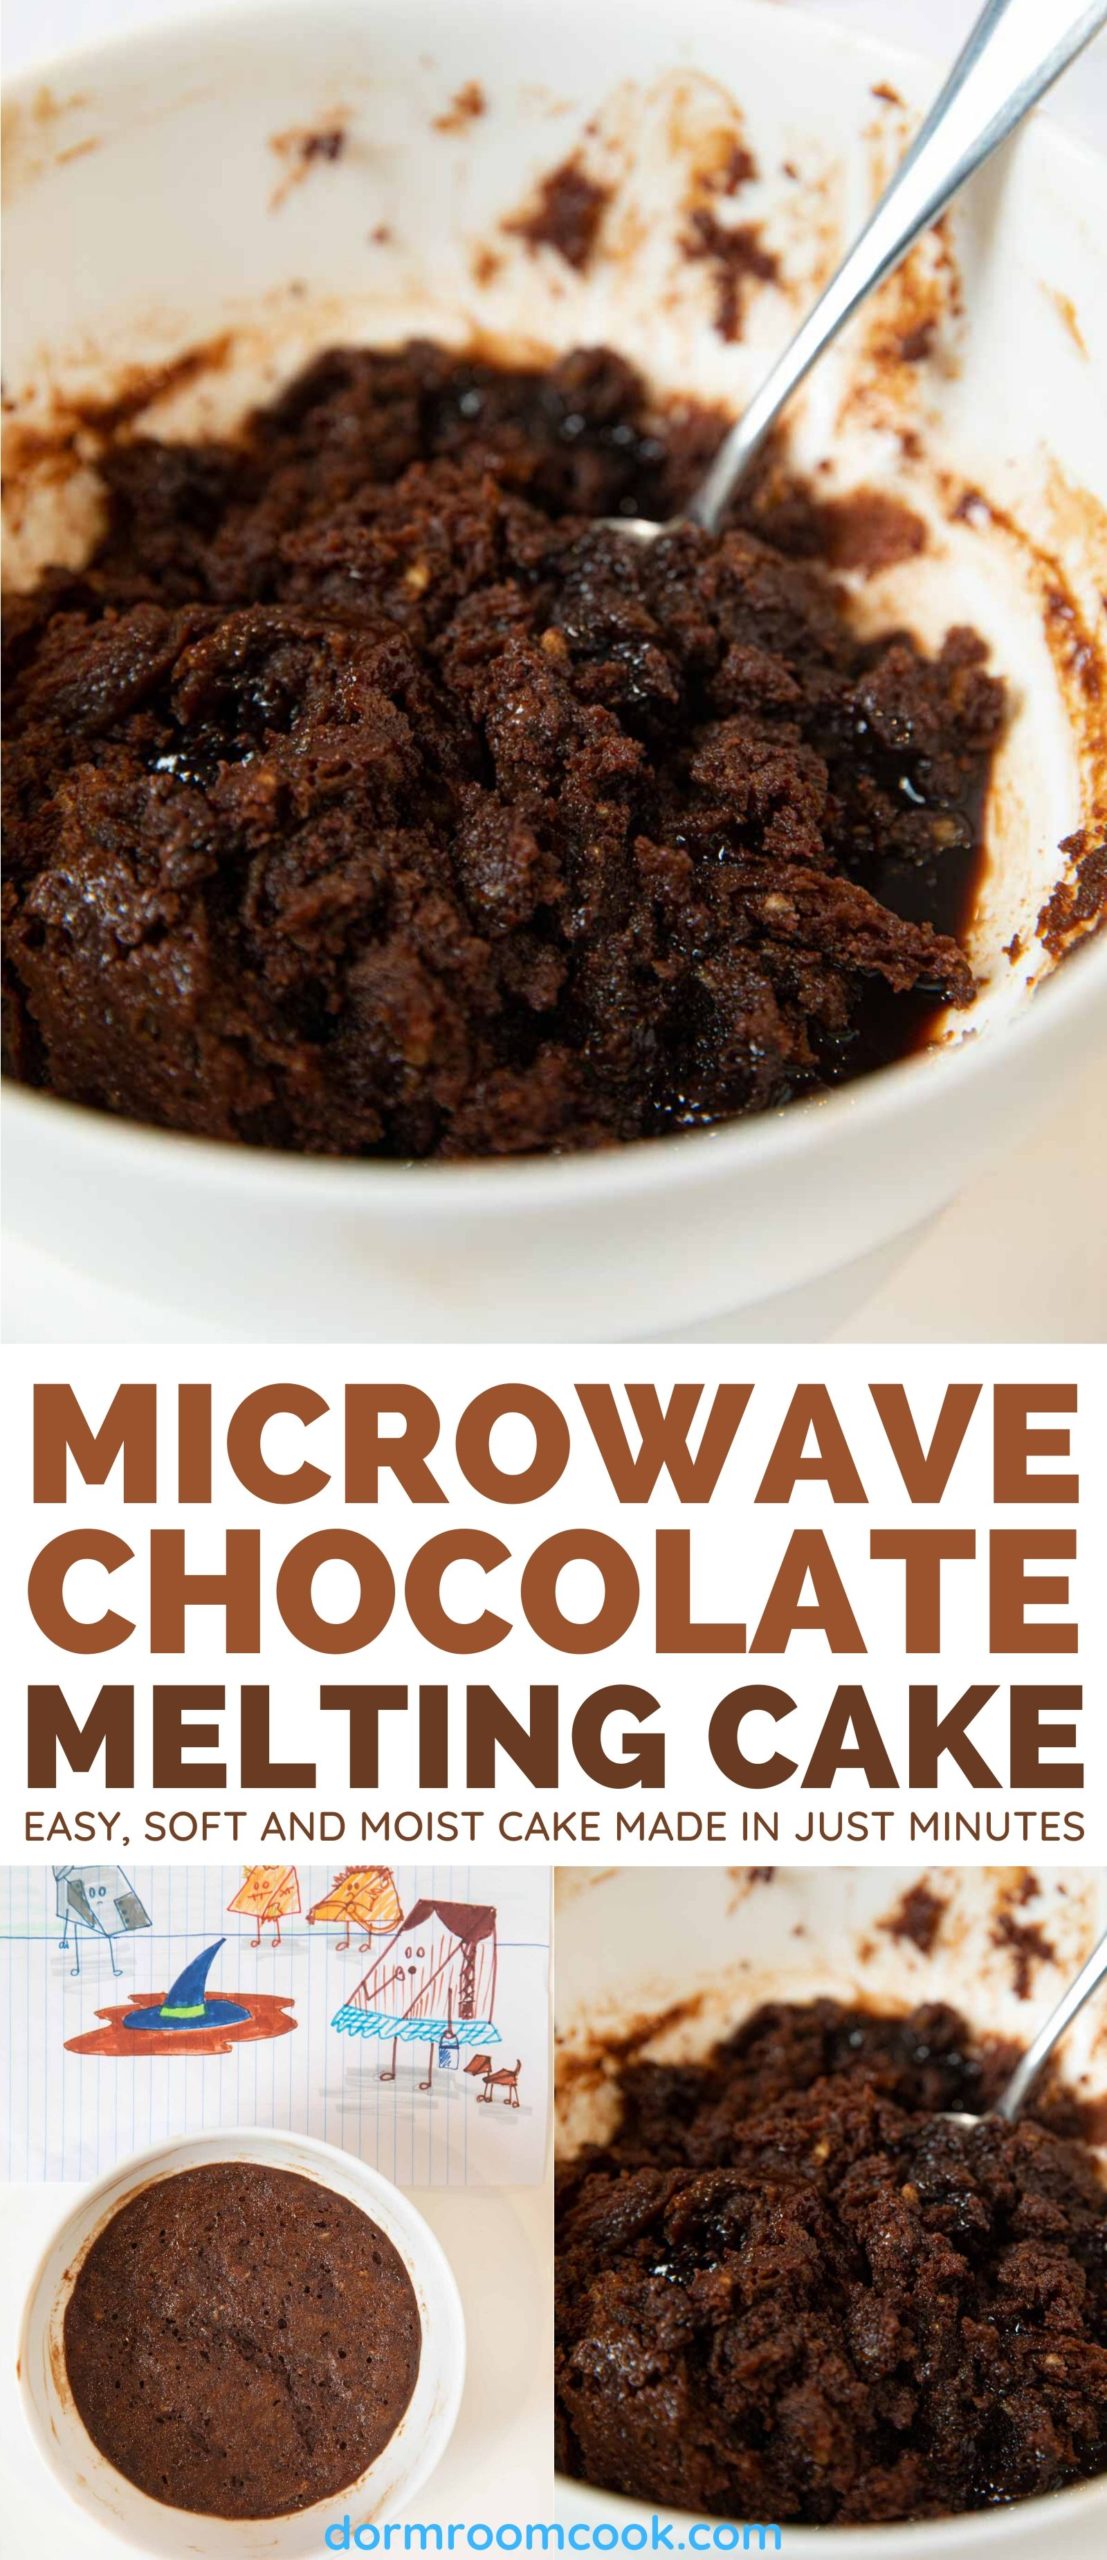 Microwave Melting Chocolate Cake collage